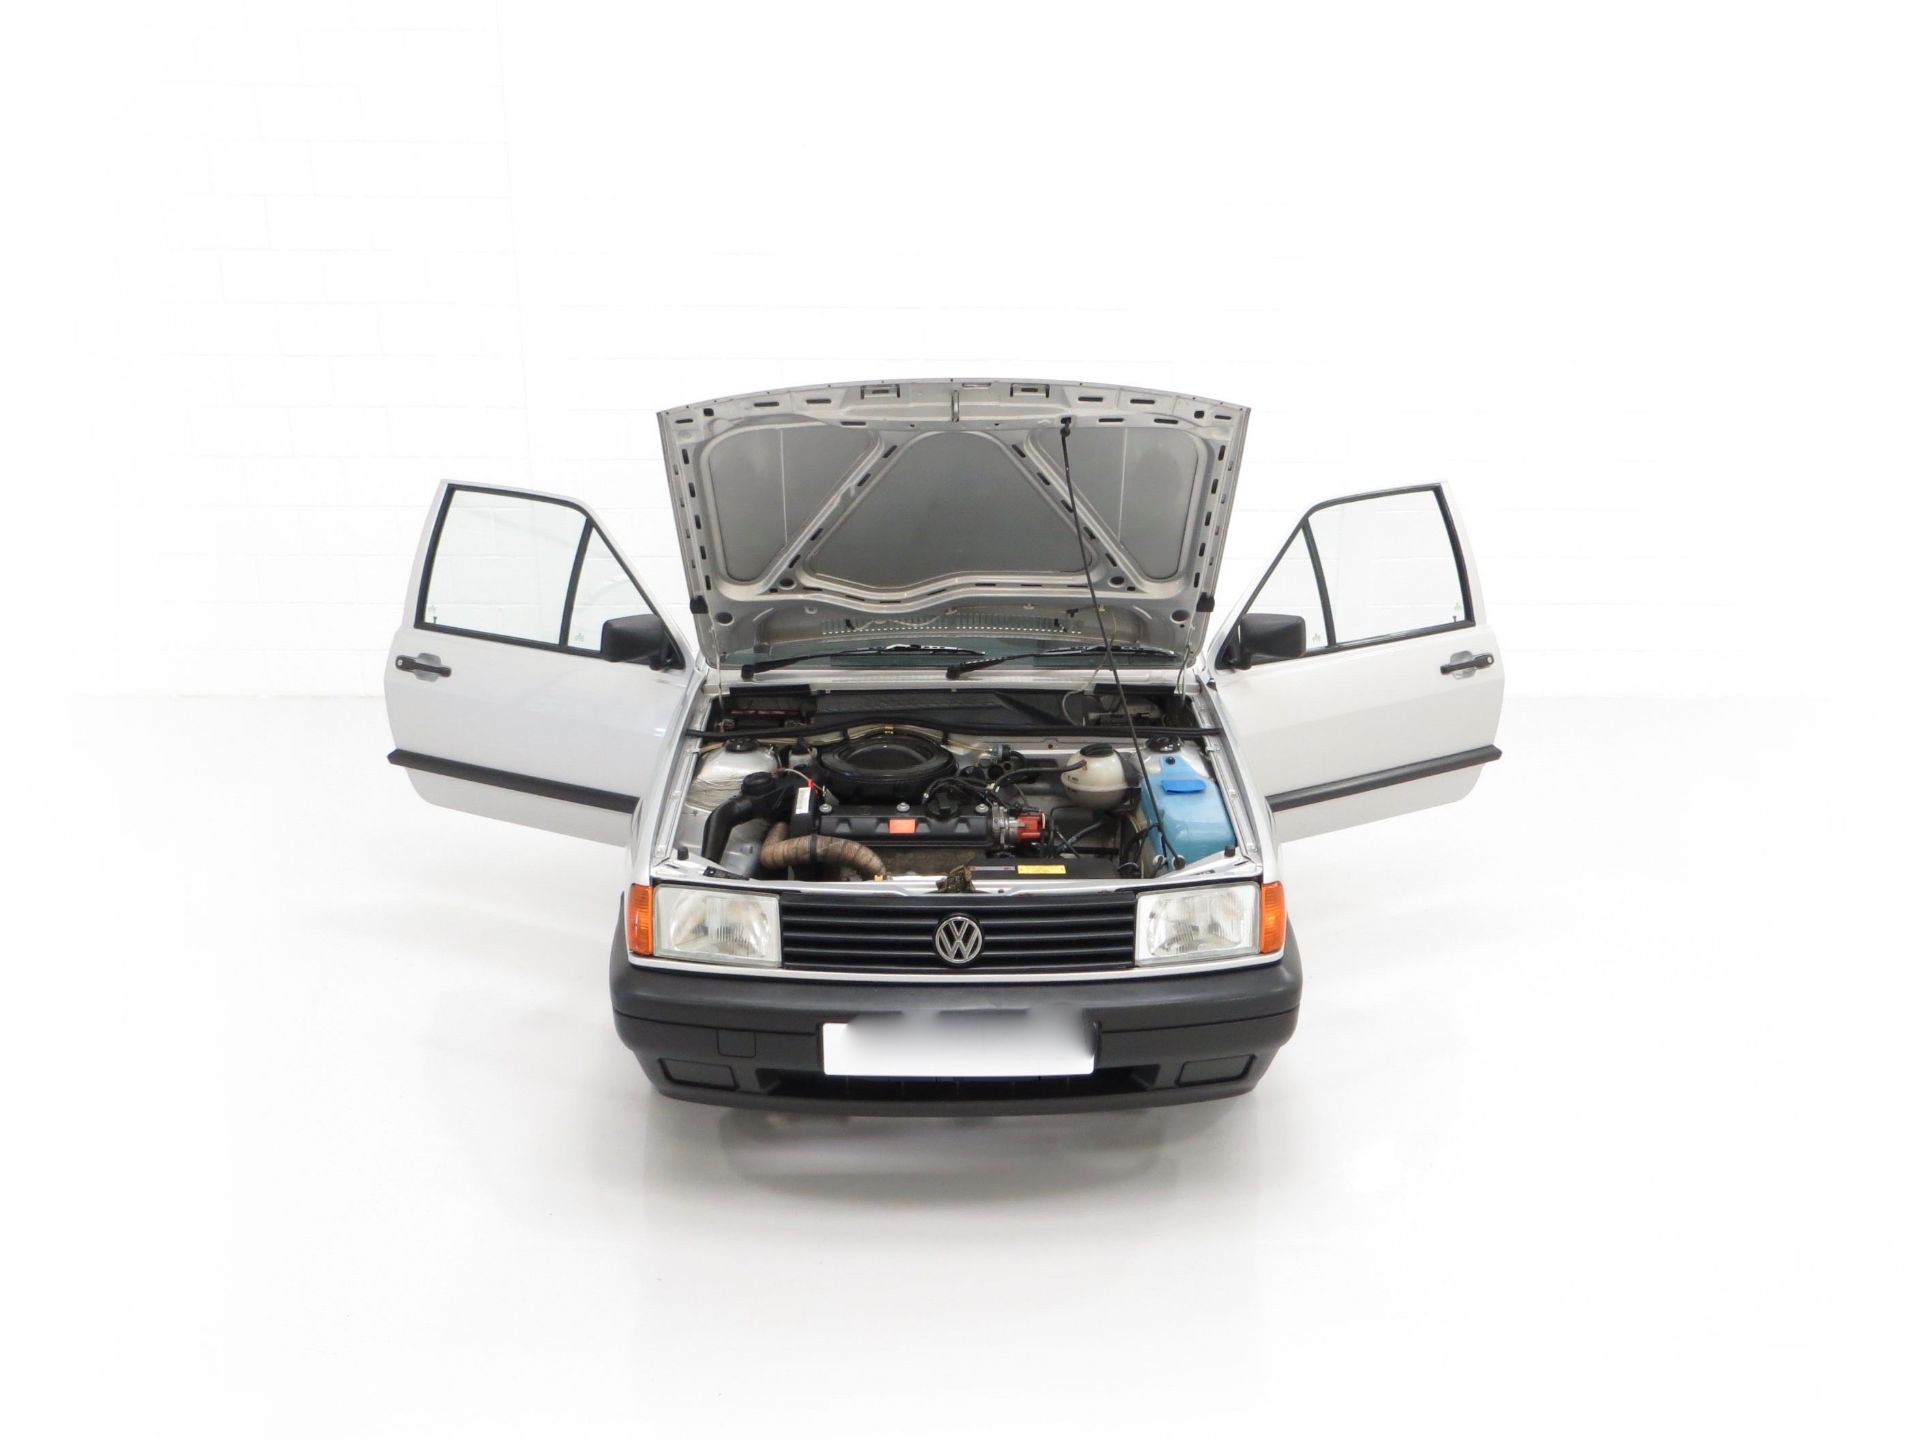 1992 Volkswagen Polo Mk2F Genesis - Image 20 of 86